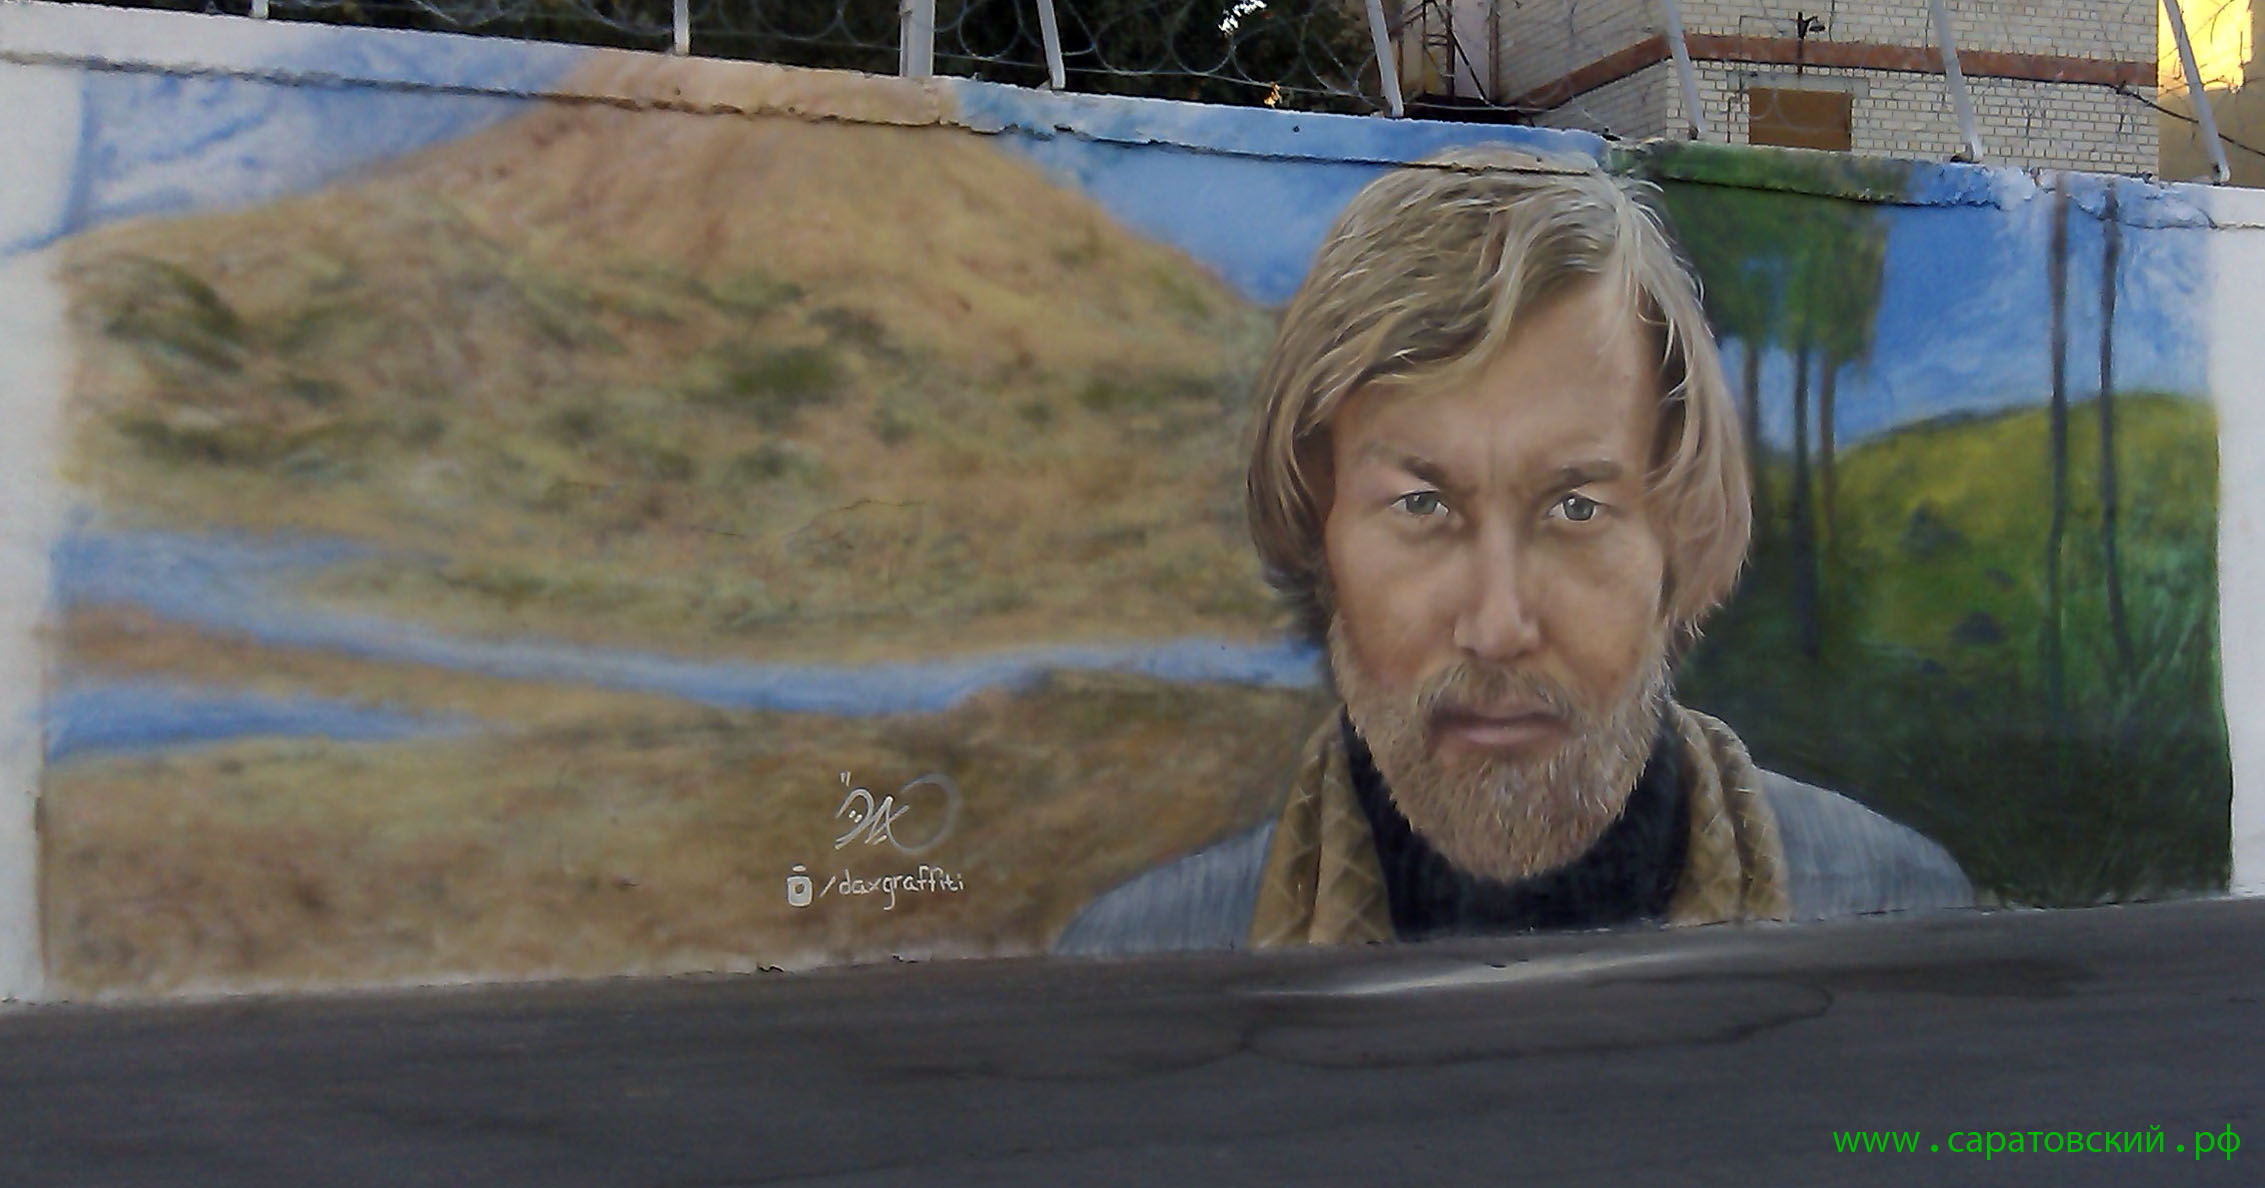 Saratov embankment graffiti: Oleg Yankovsky and Saratov, Russia